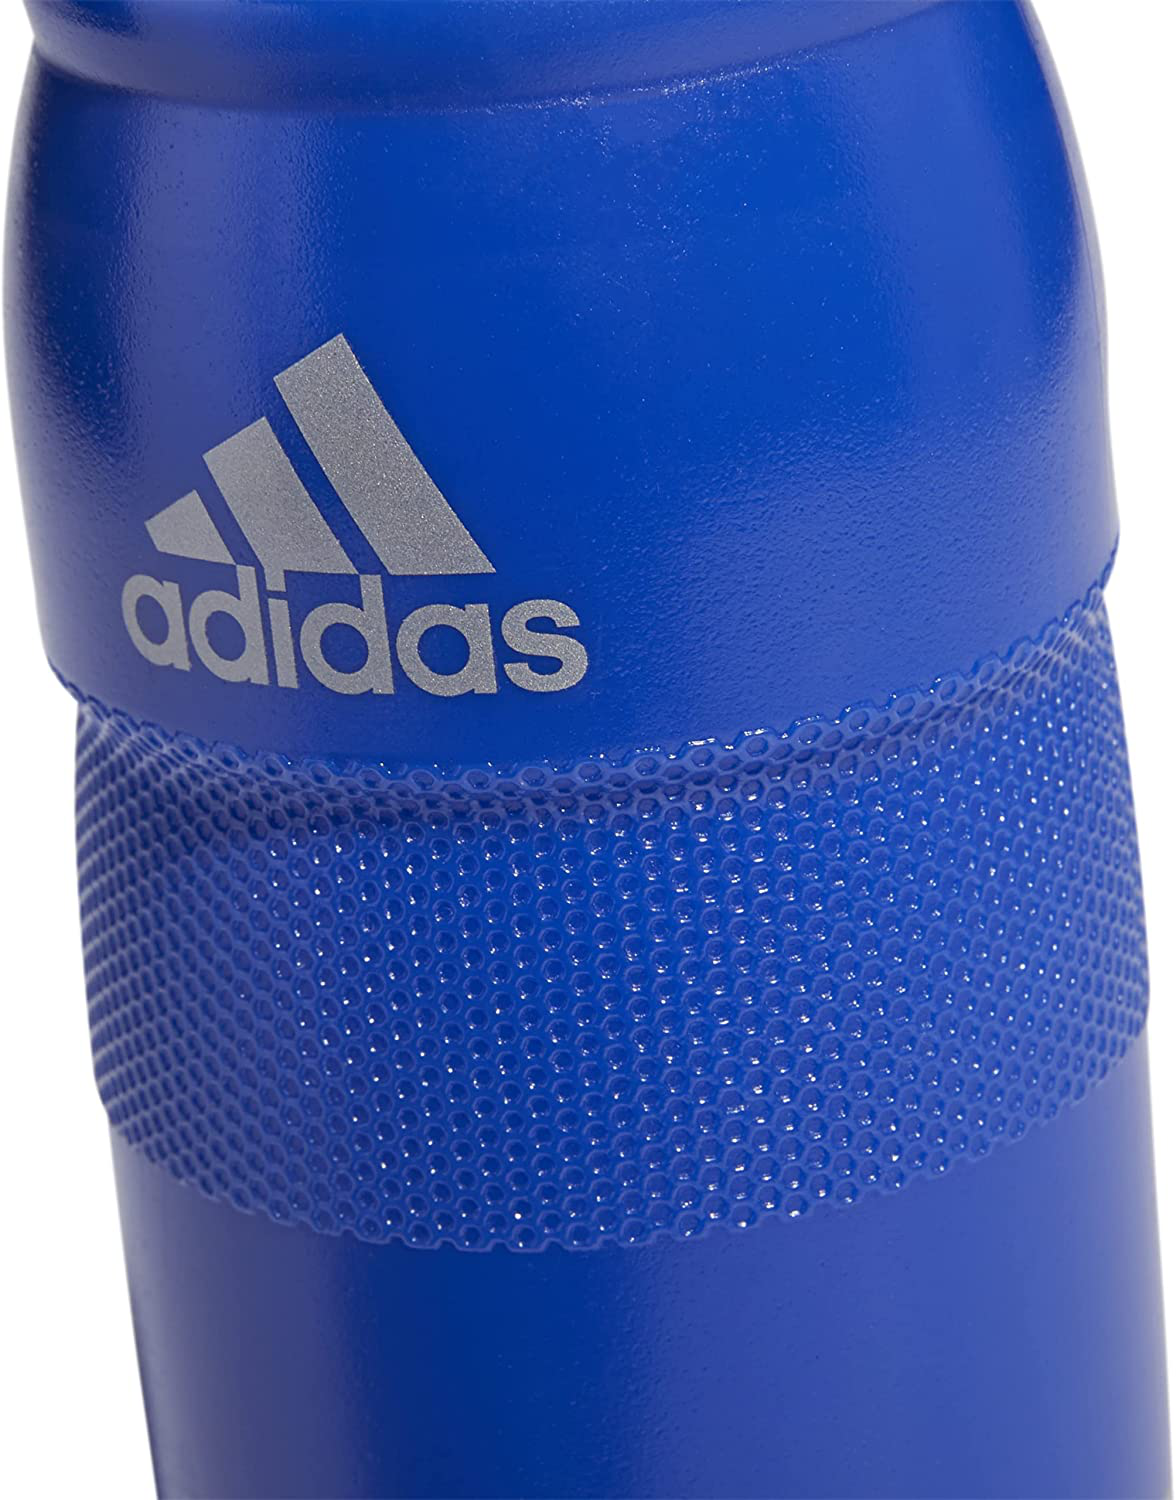 adidas Stadium 750 ML (26oz) Plastic Water Bottle